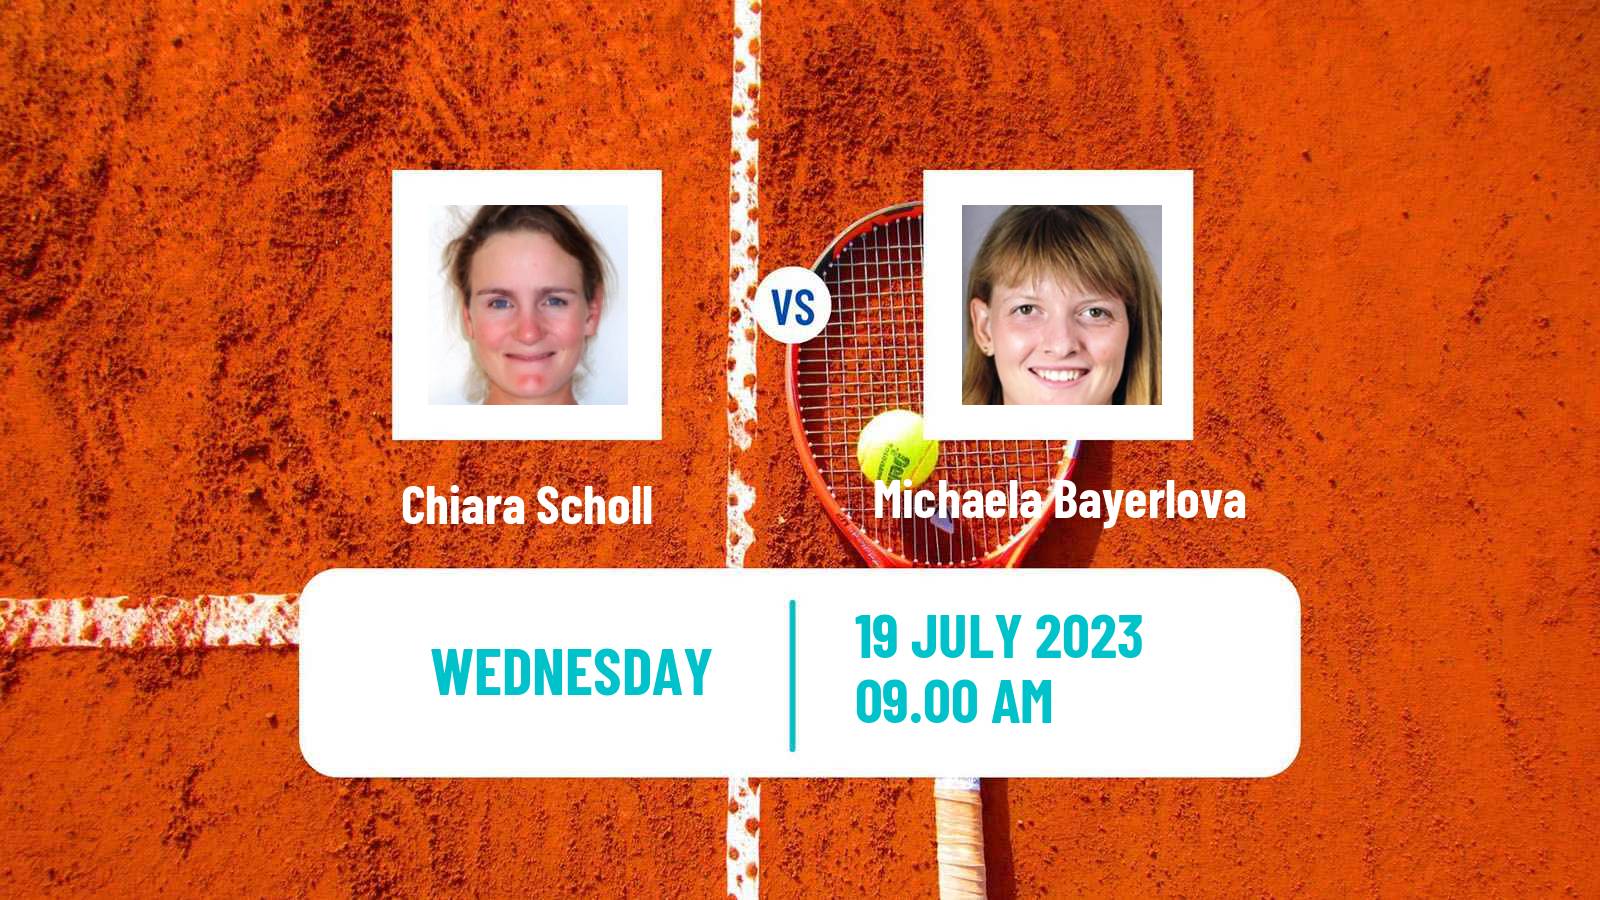 Tennis ITF W25 Darmstadt Women Chiara Scholl - Michaela Bayerlova